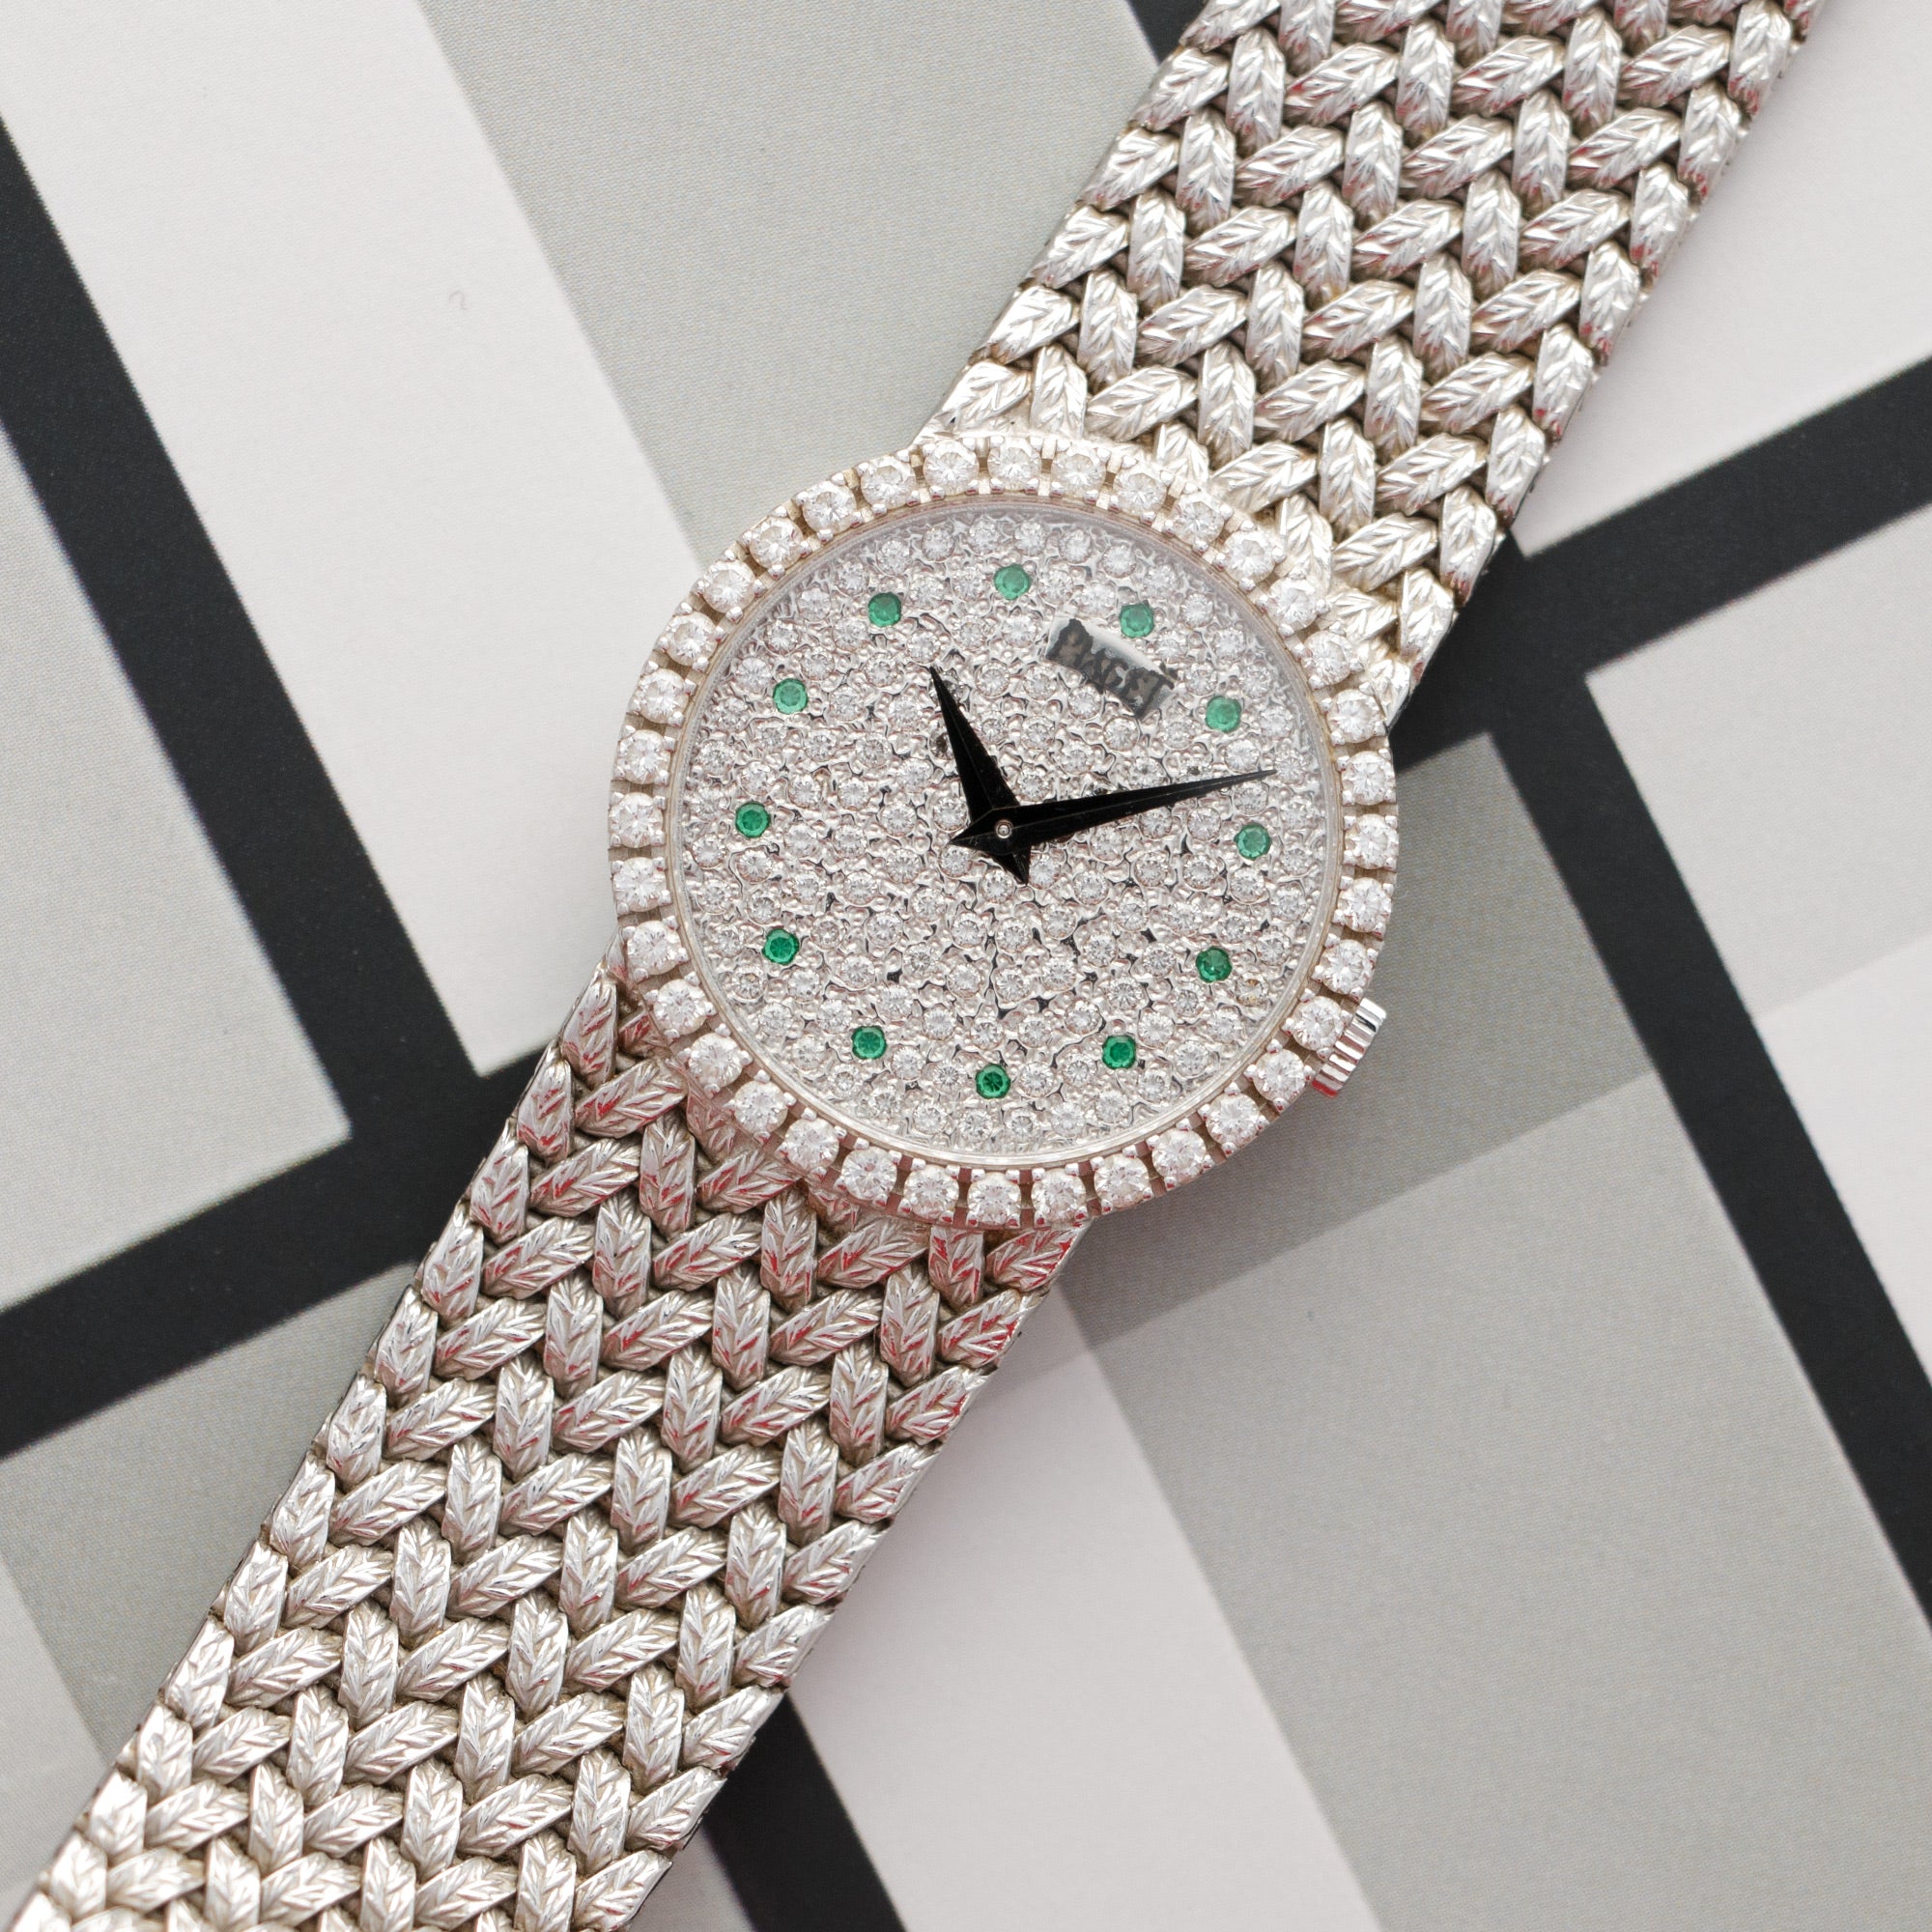 Piaget - Piaget White Gold Diamond Emerald Watch, 1970s - The Keystone Watches